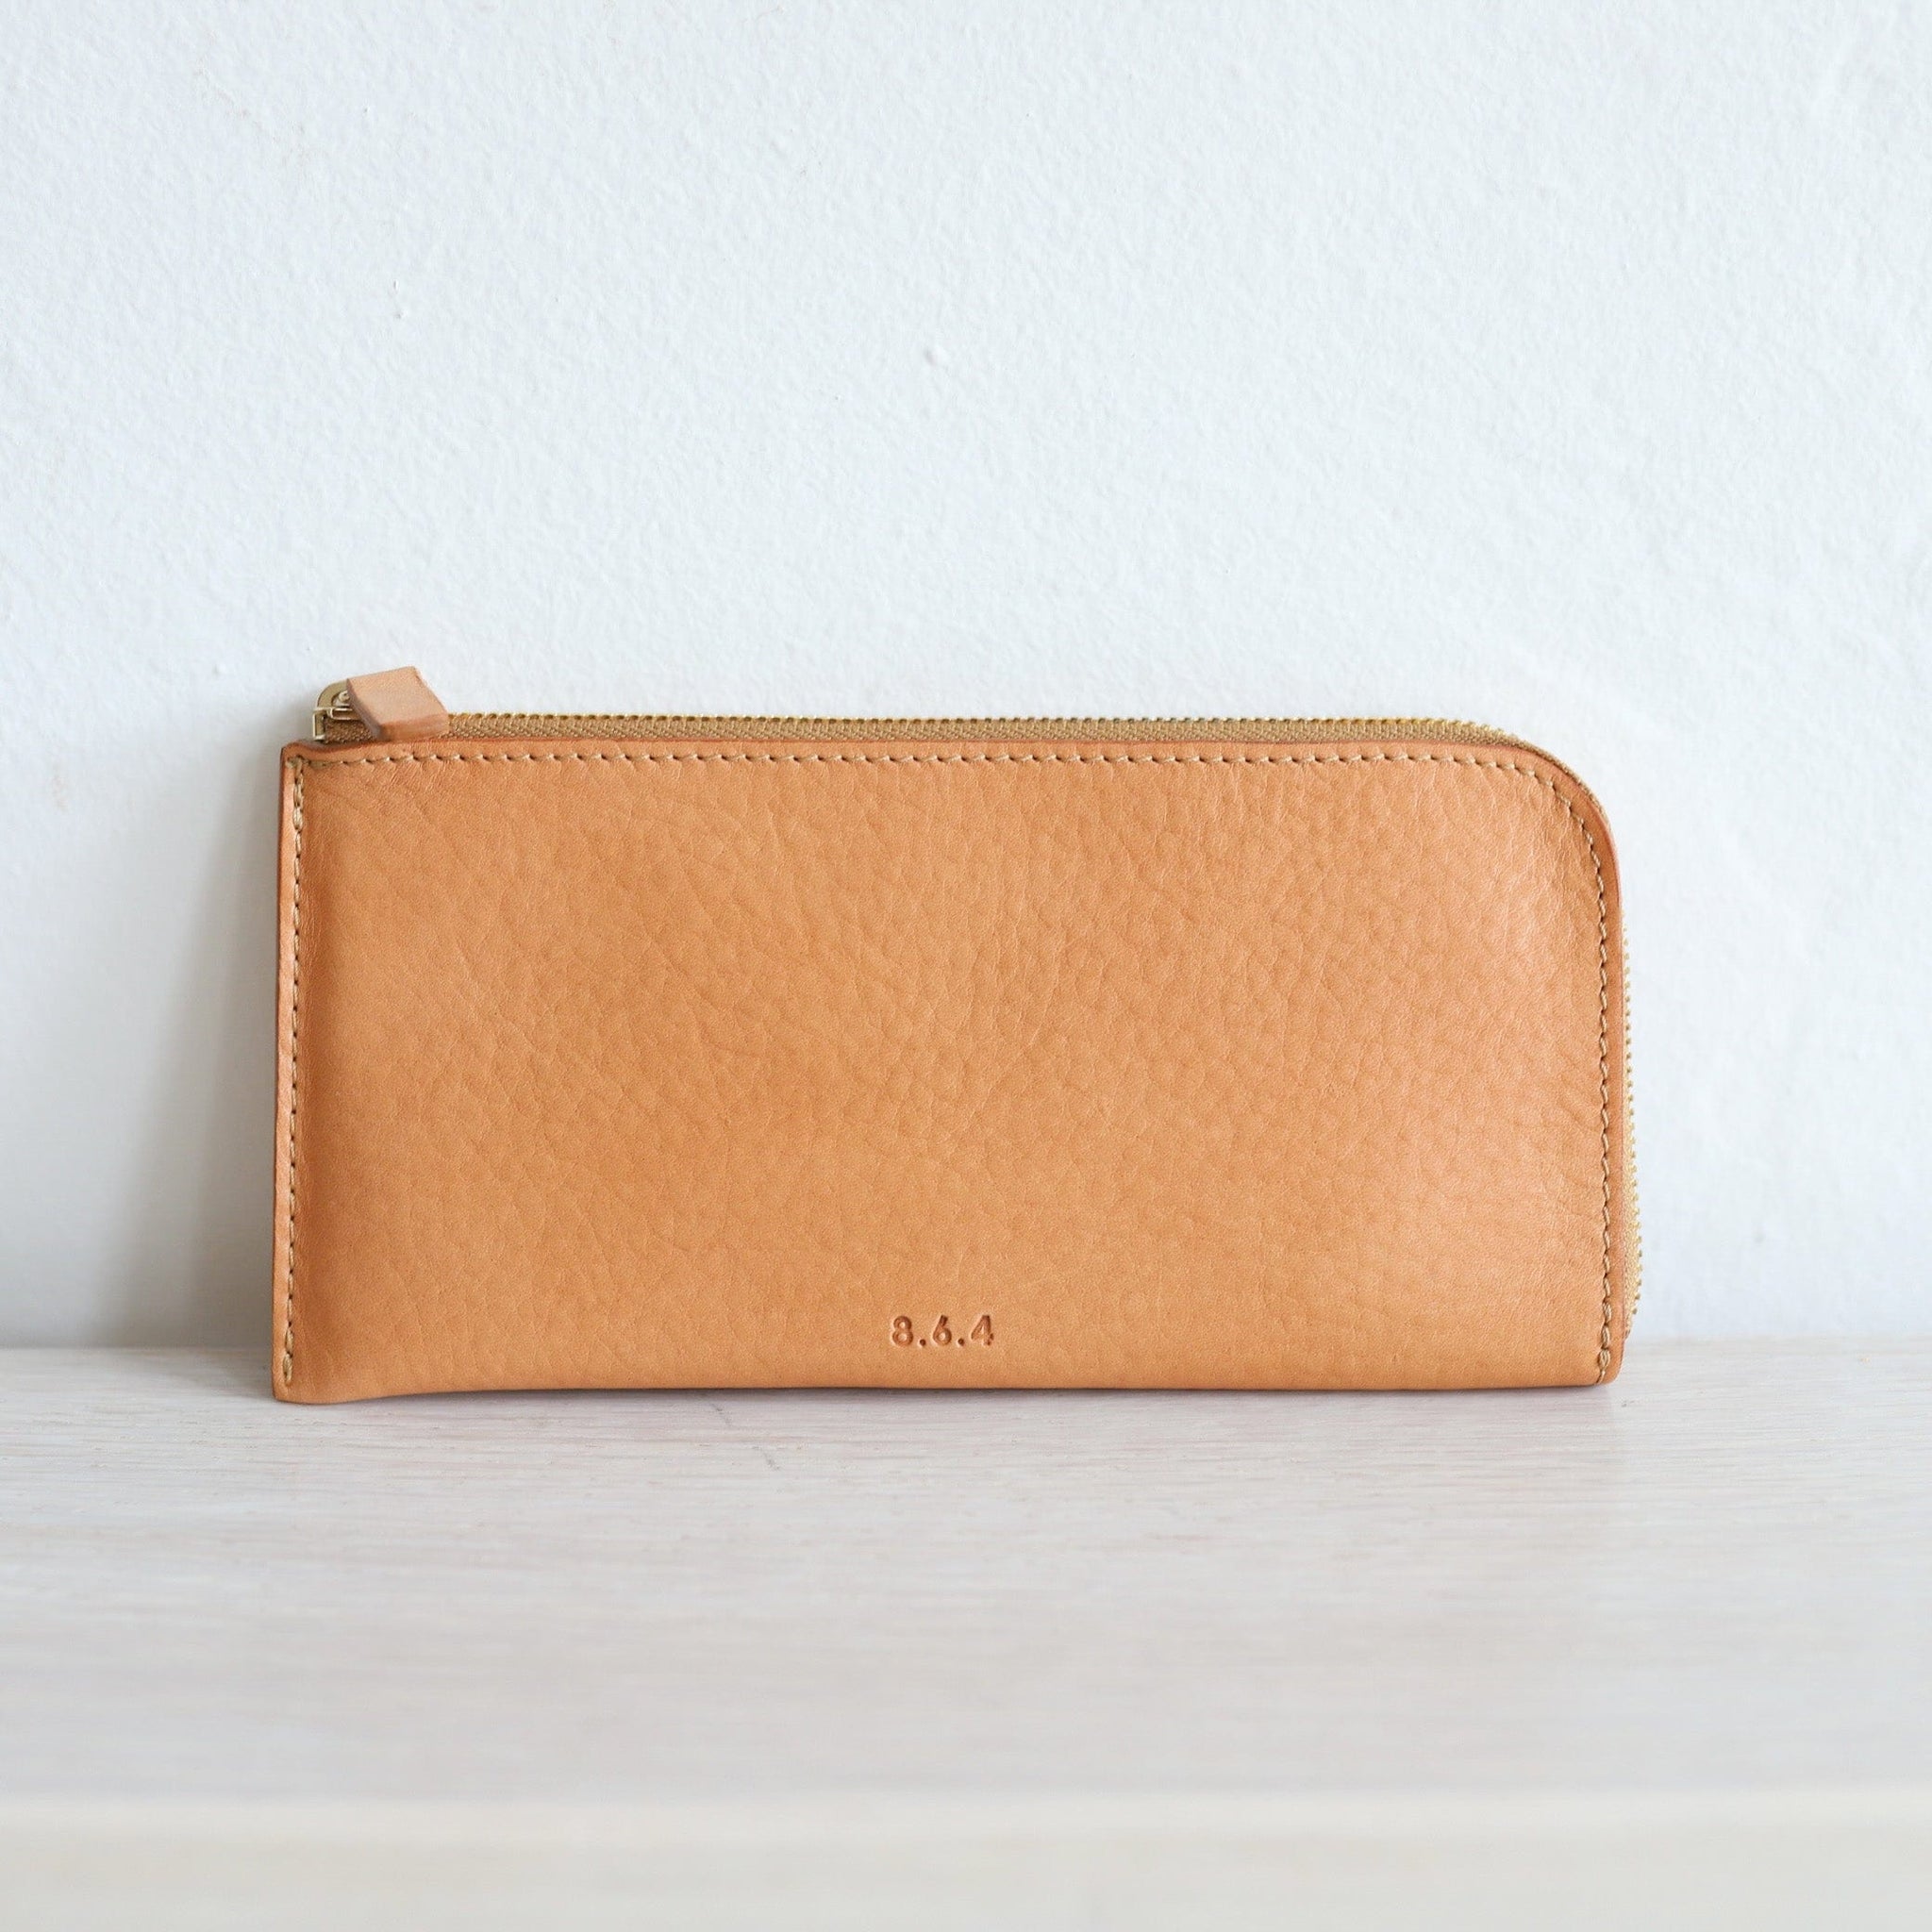 8.6.4 Tan Long Leather Wallet